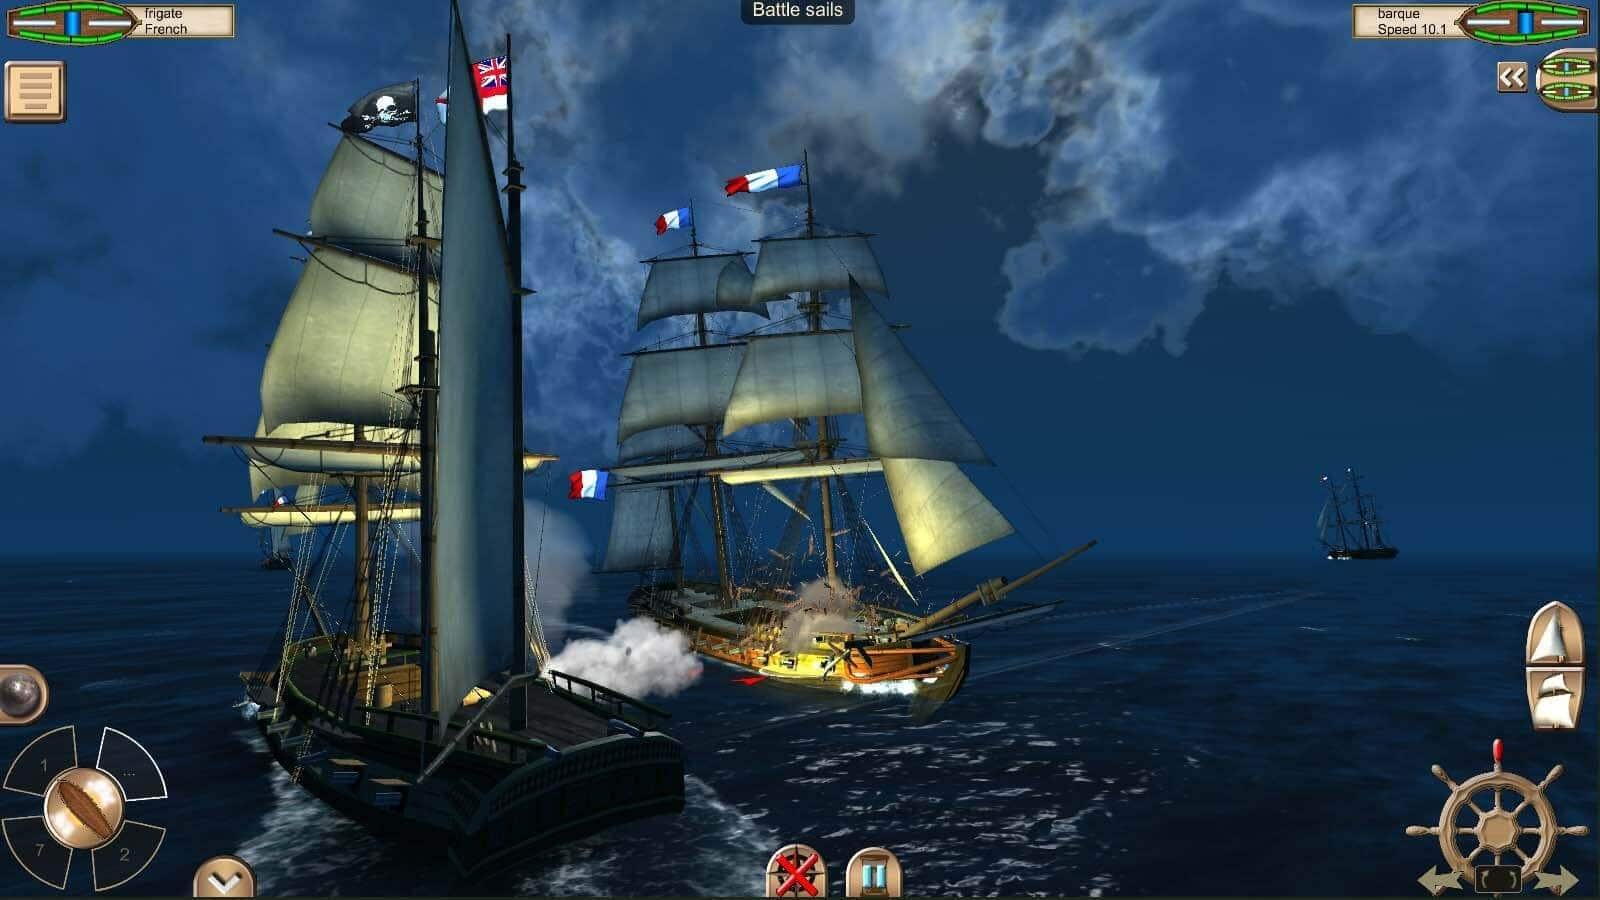 Download The Pirate- Caribbean Hunt 